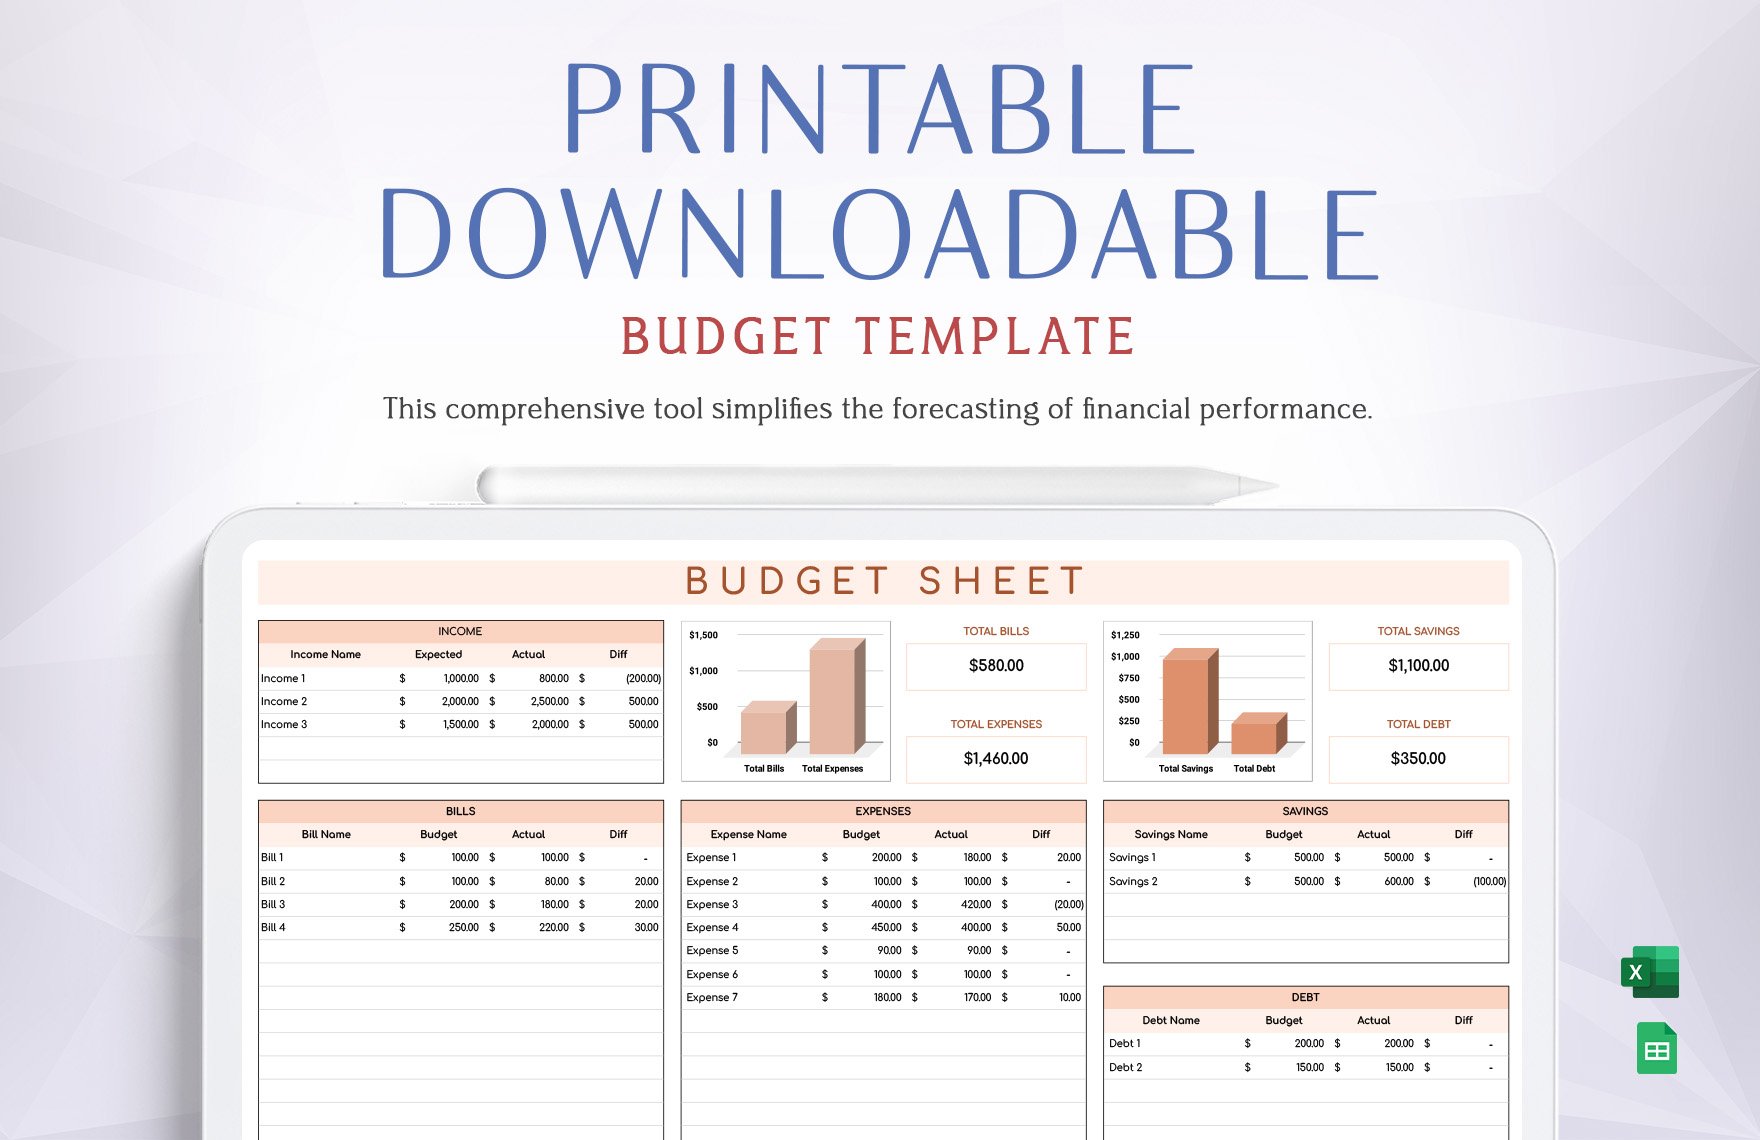 Printable, Downloadable Budget Template